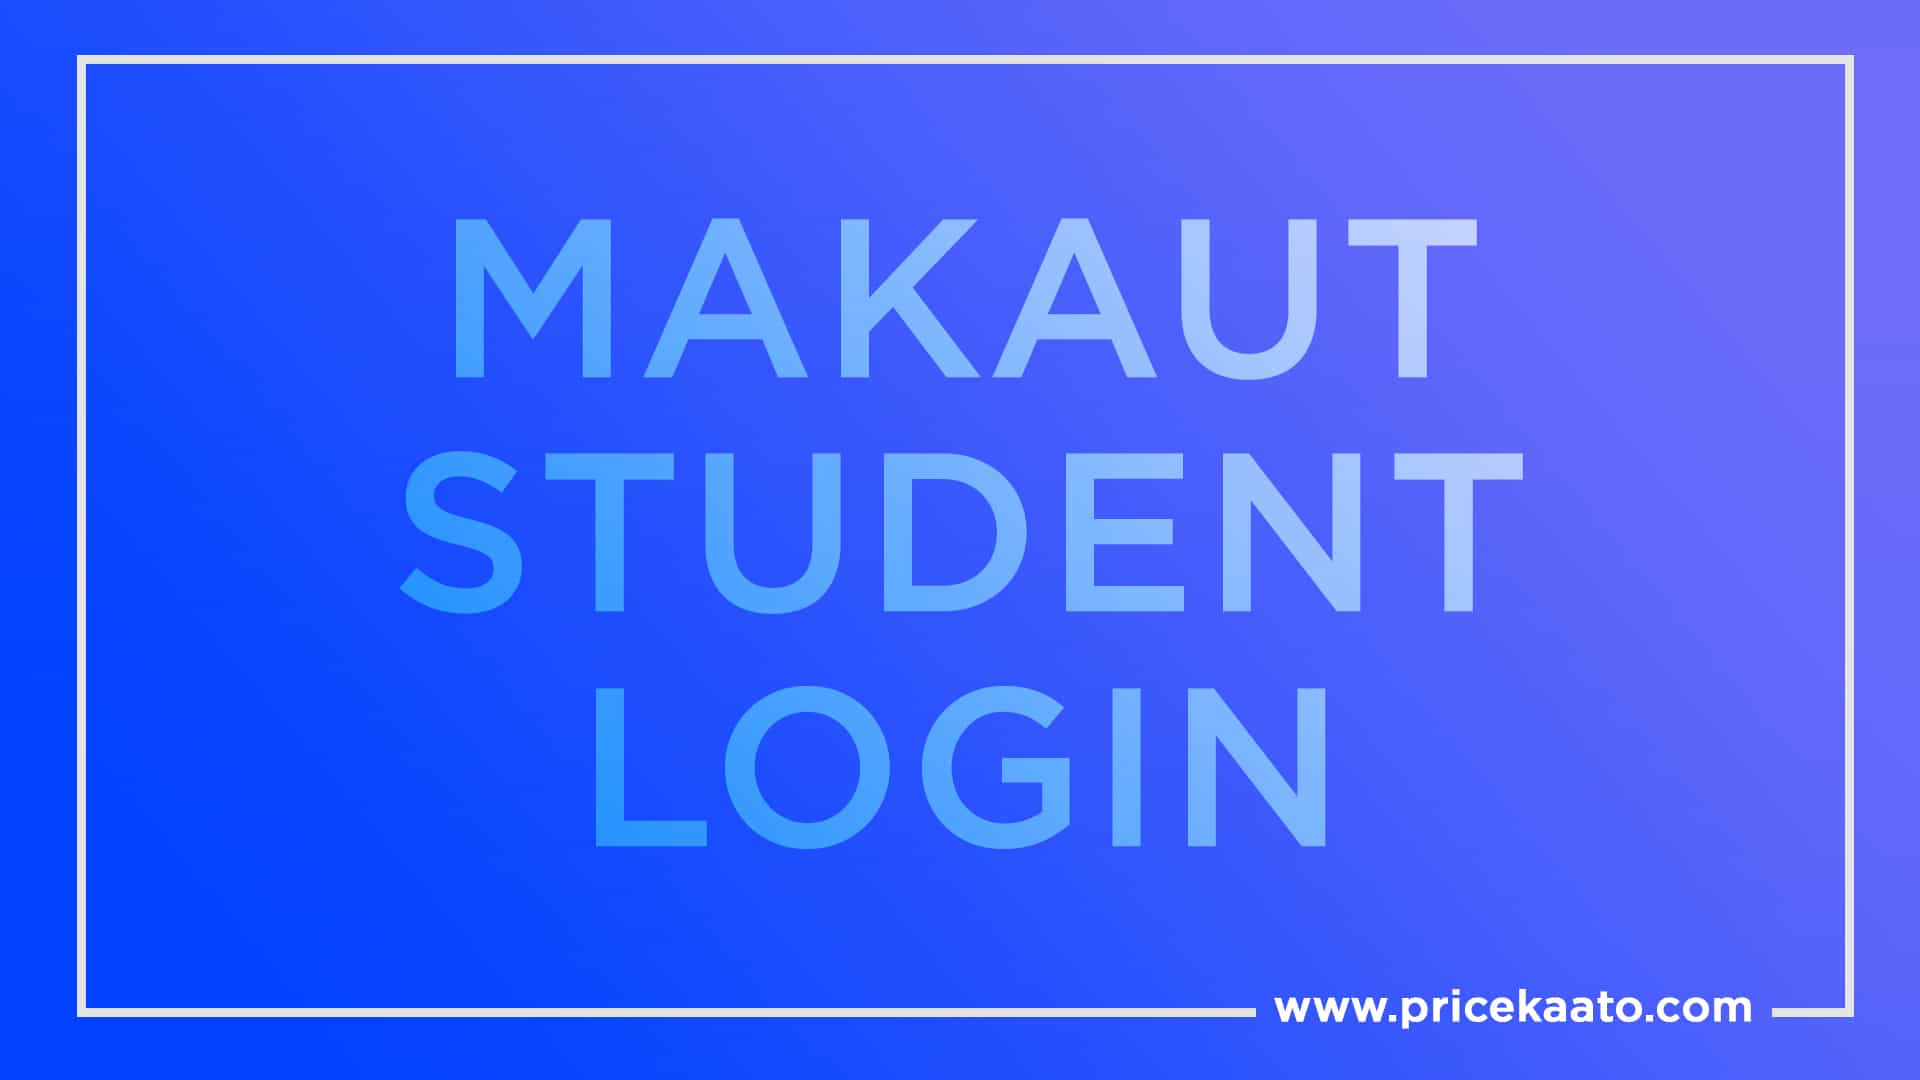 Makaut Student Login Portal How To Teacher Administrator Evaluator, Study Center Login